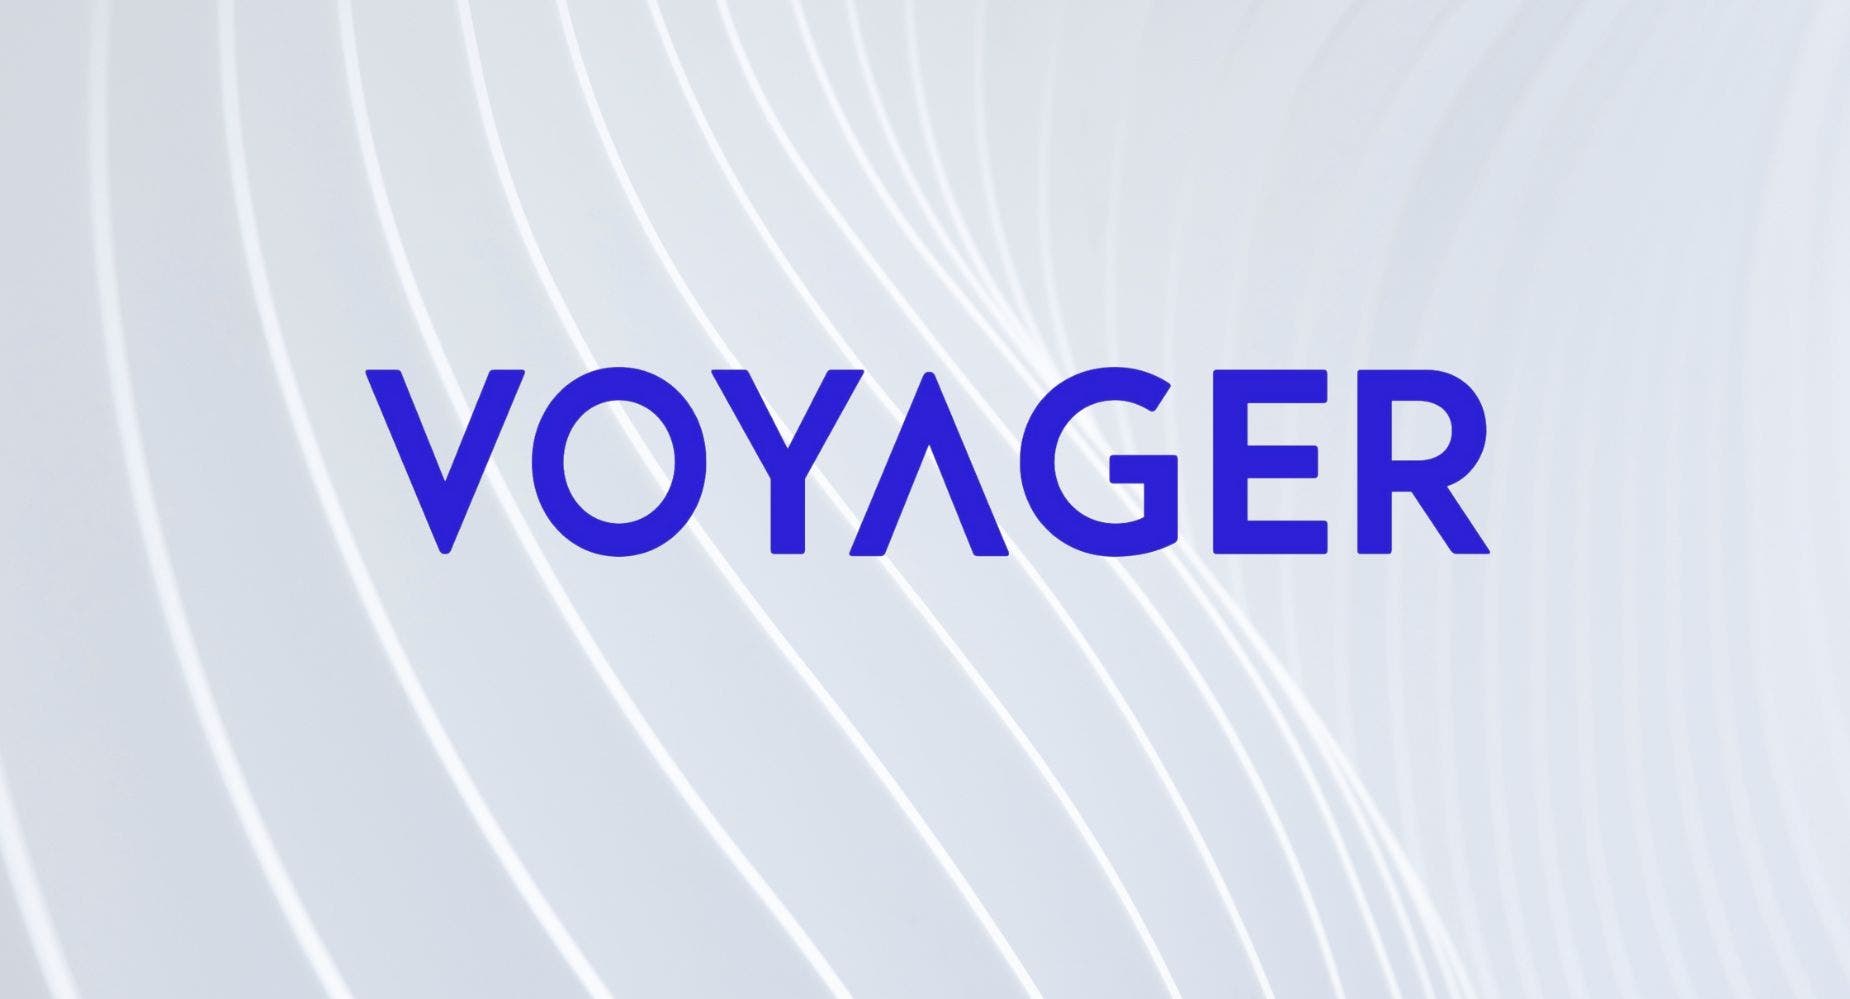 BREAKING: In-Depth Details Of FTX Proposal To Voyager Digital Customers